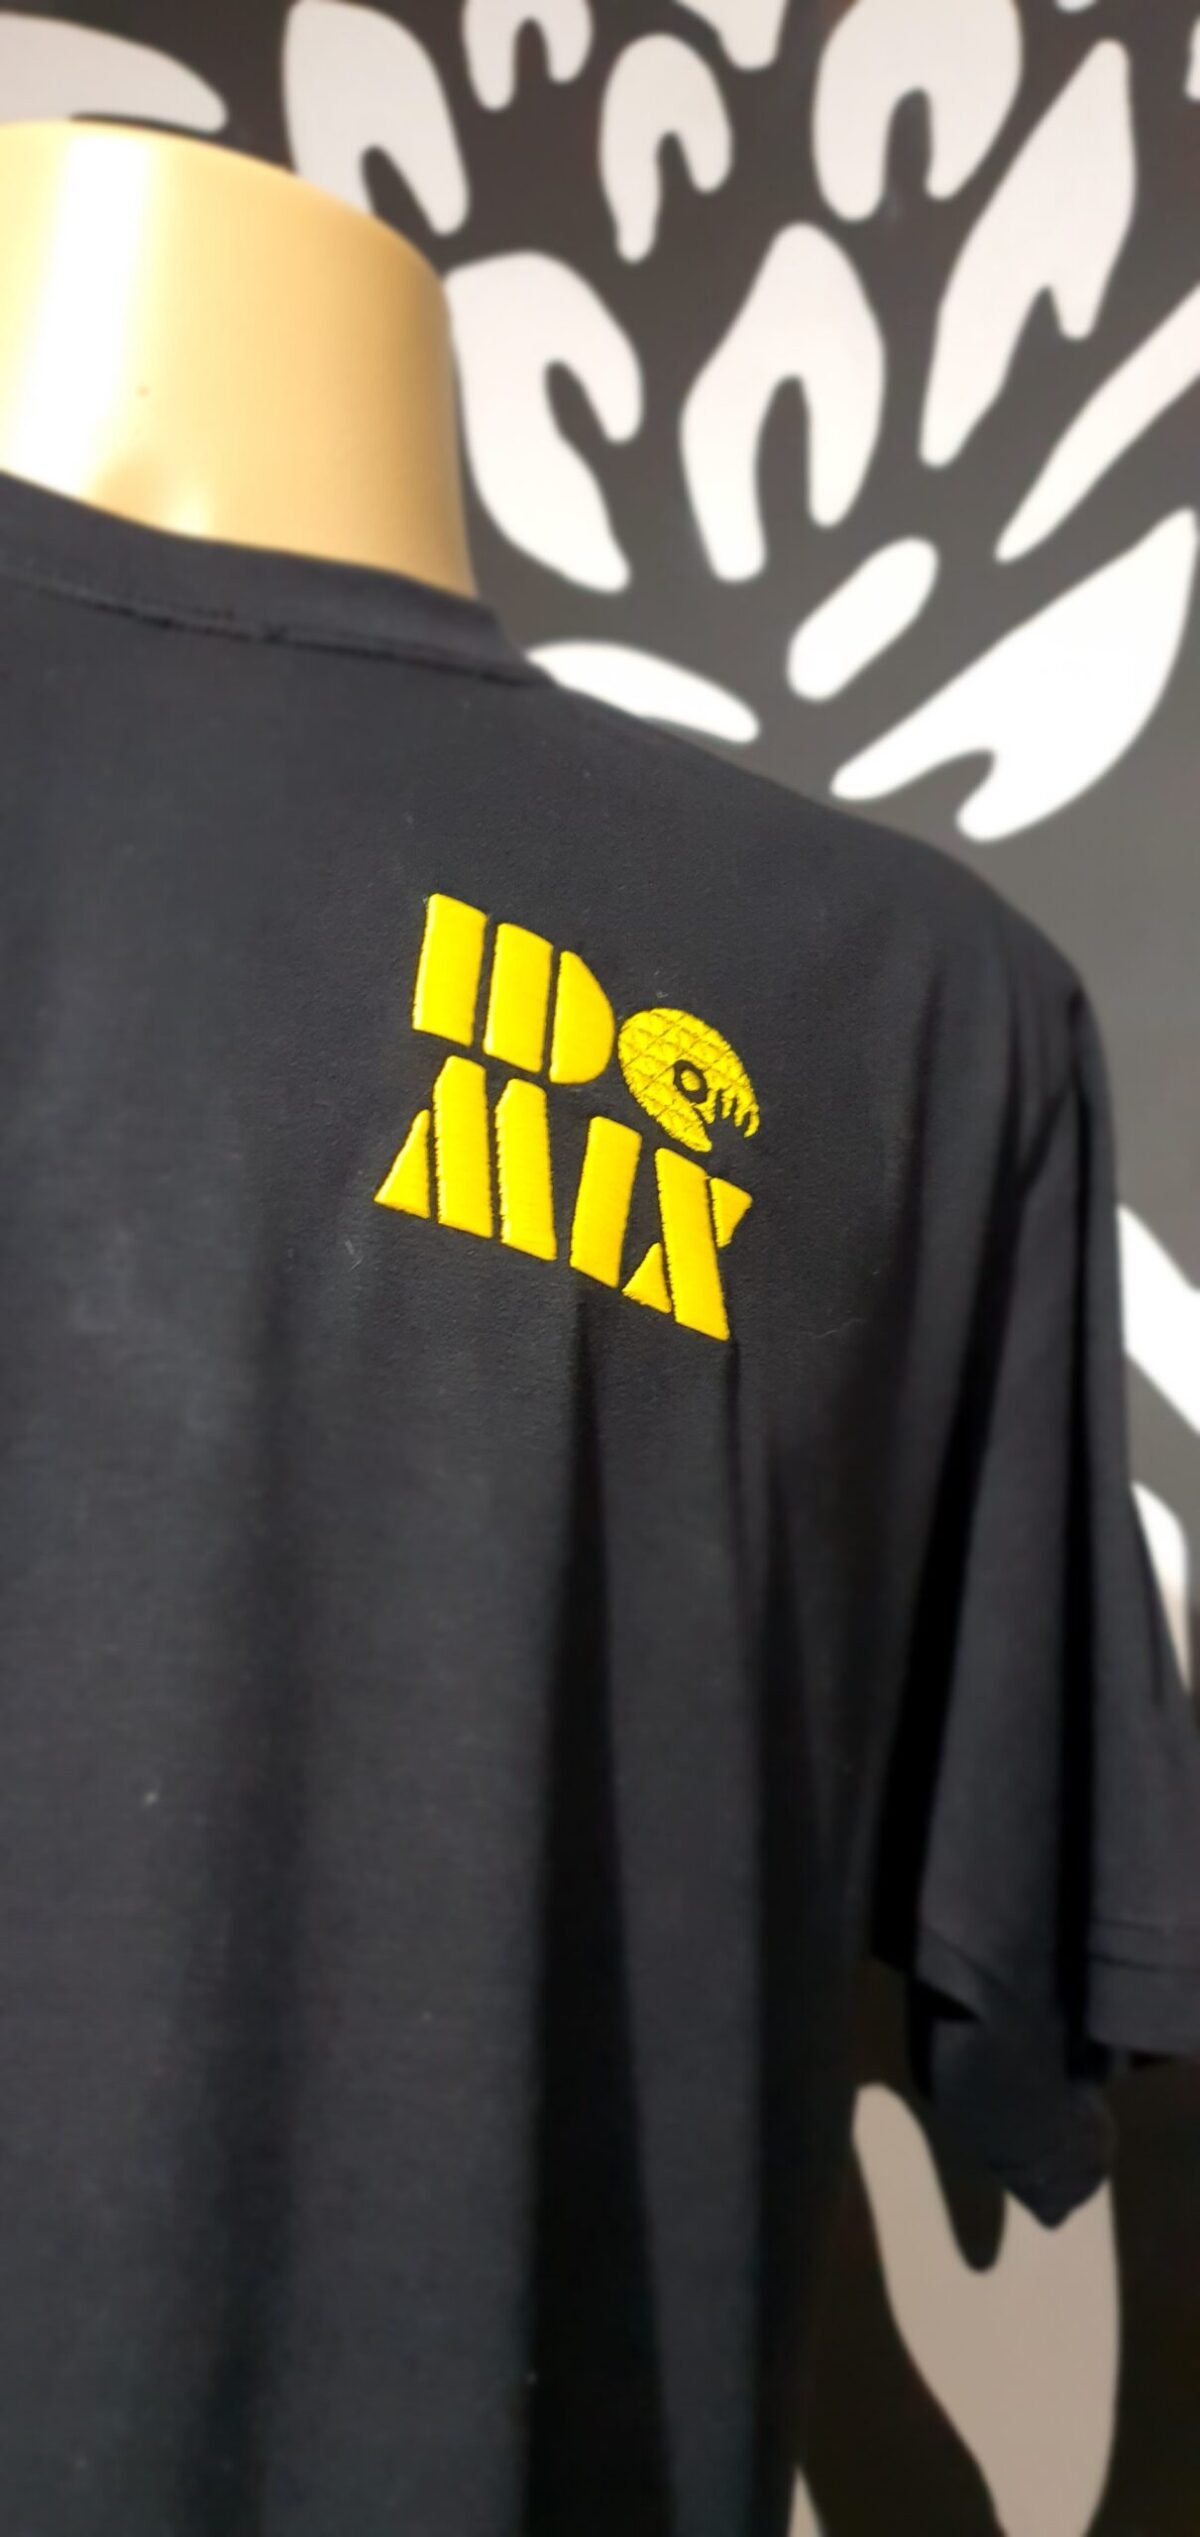 Camiseta Bordada DJ IDO MIX by Bordado & Cia - @bordado.cia @djidomix @canaldj